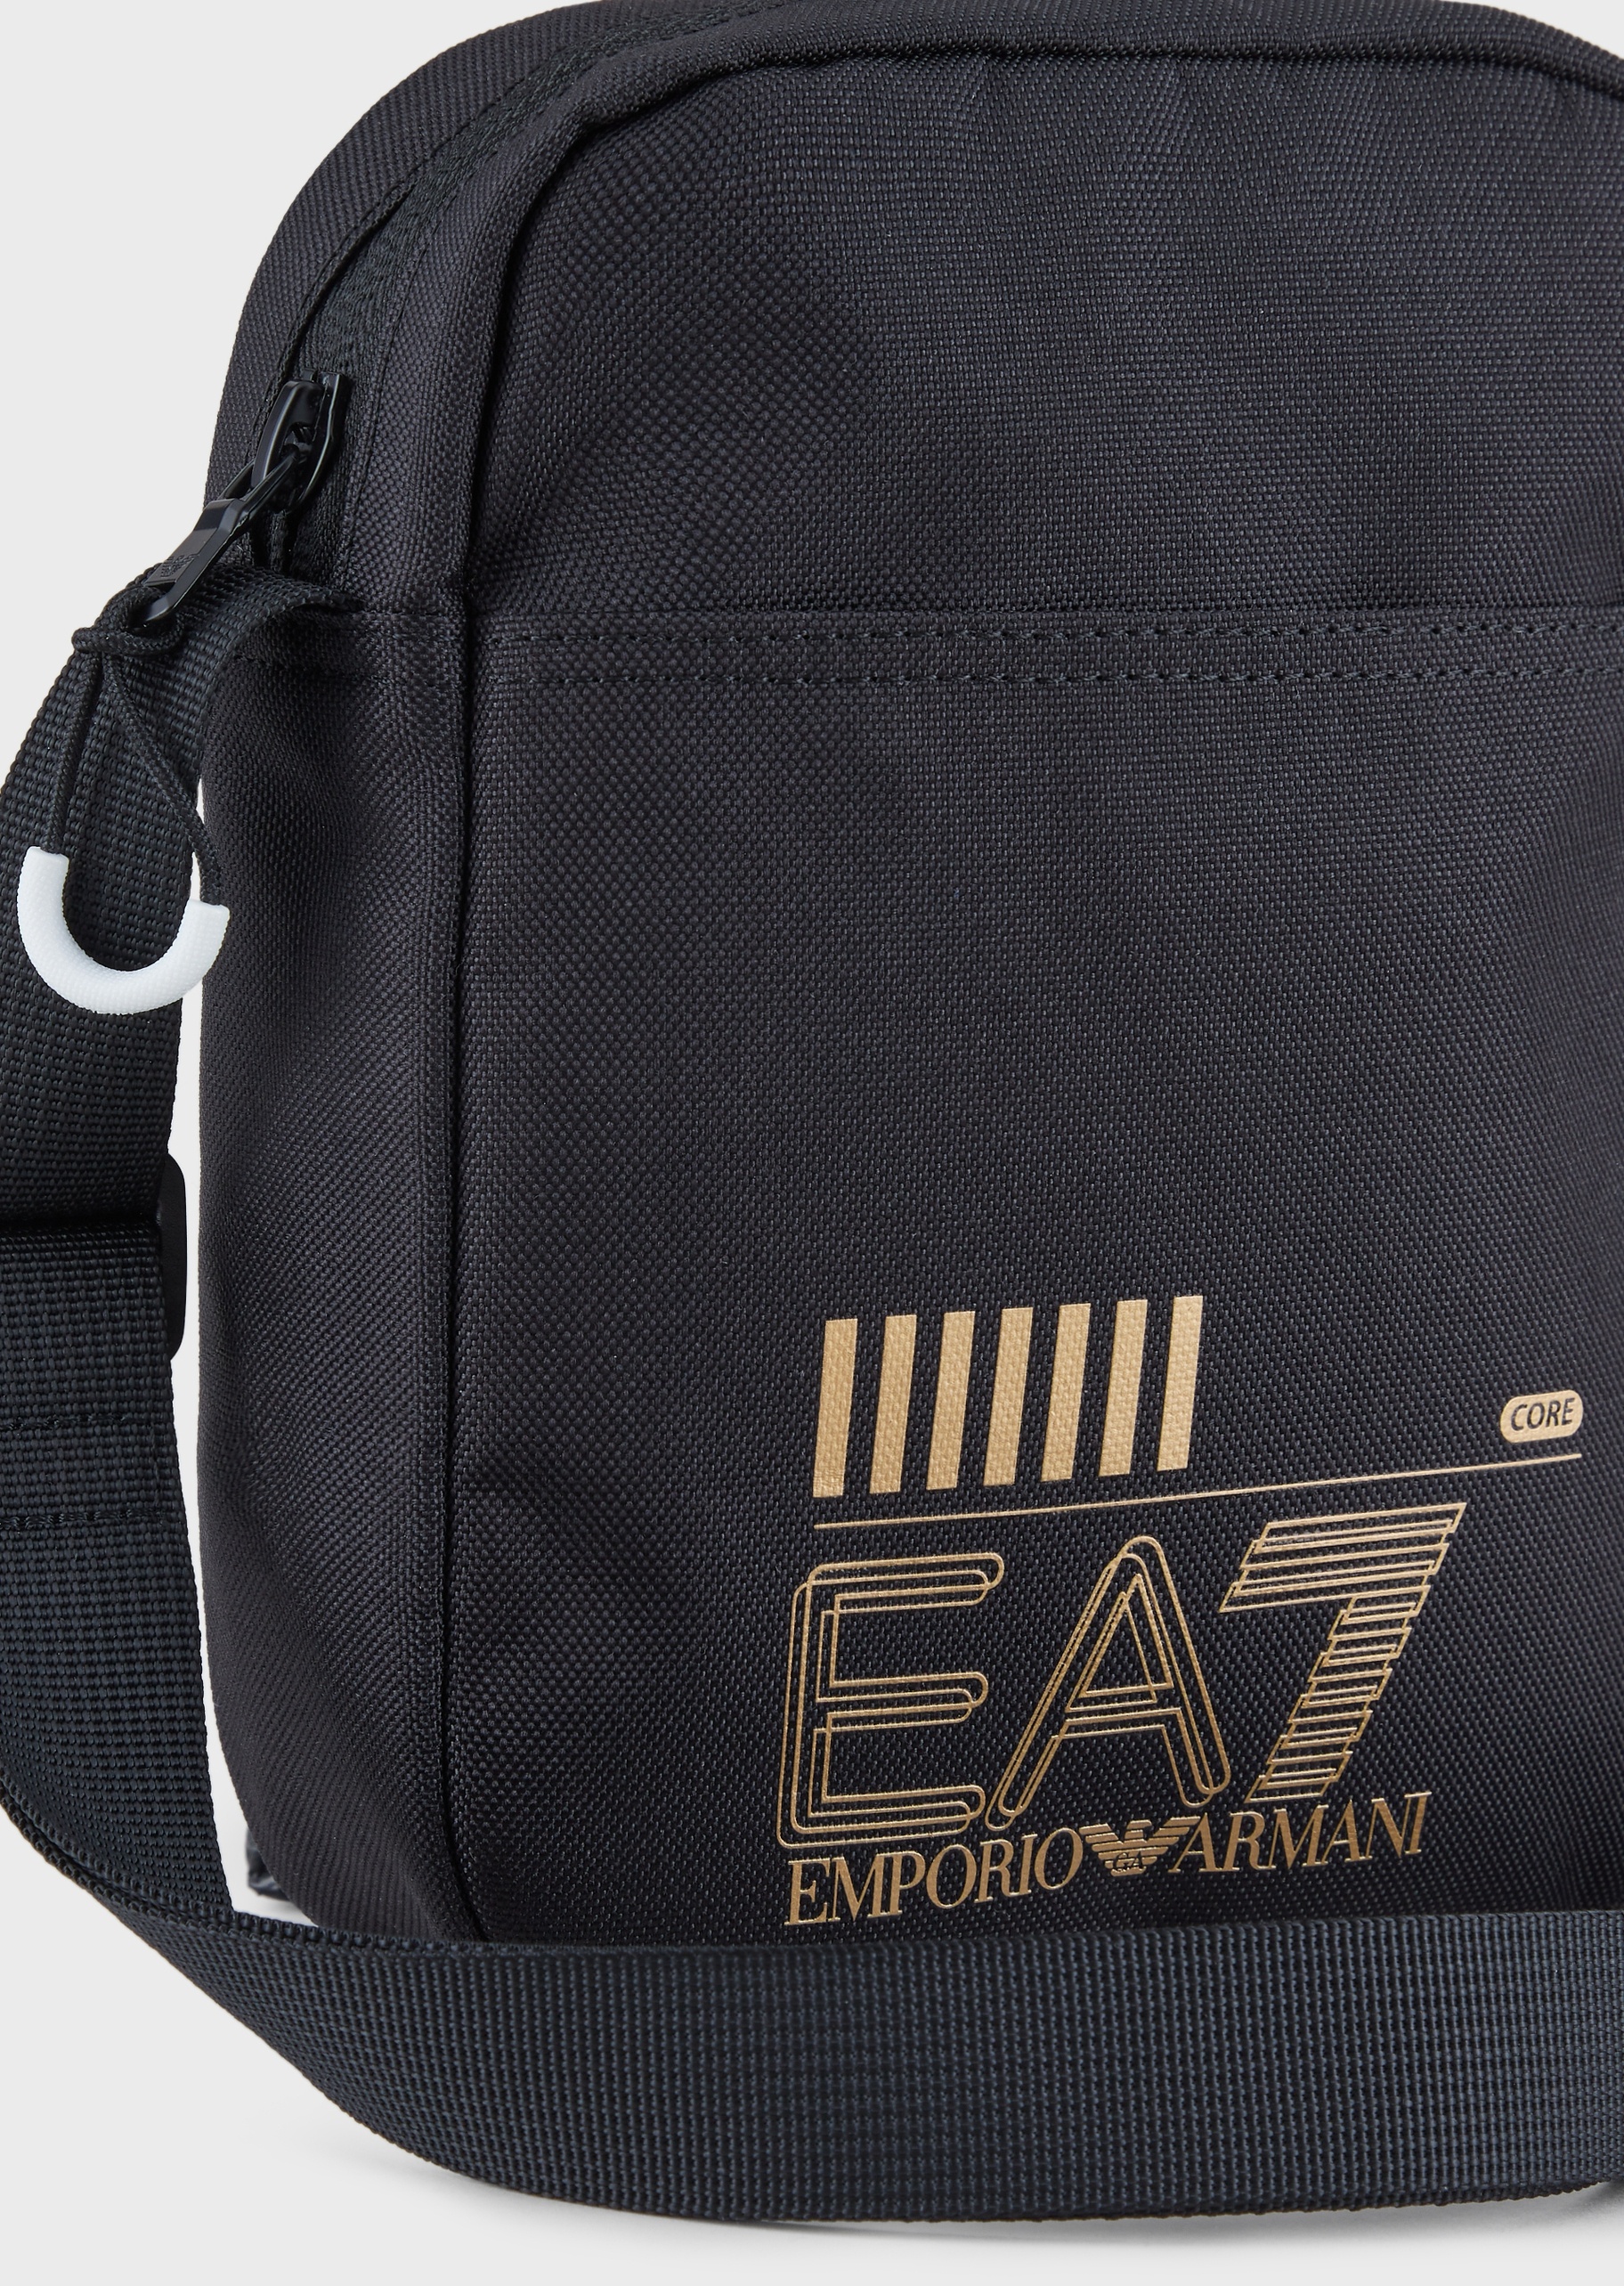 EA7 男女可持续方形运动斜挎包